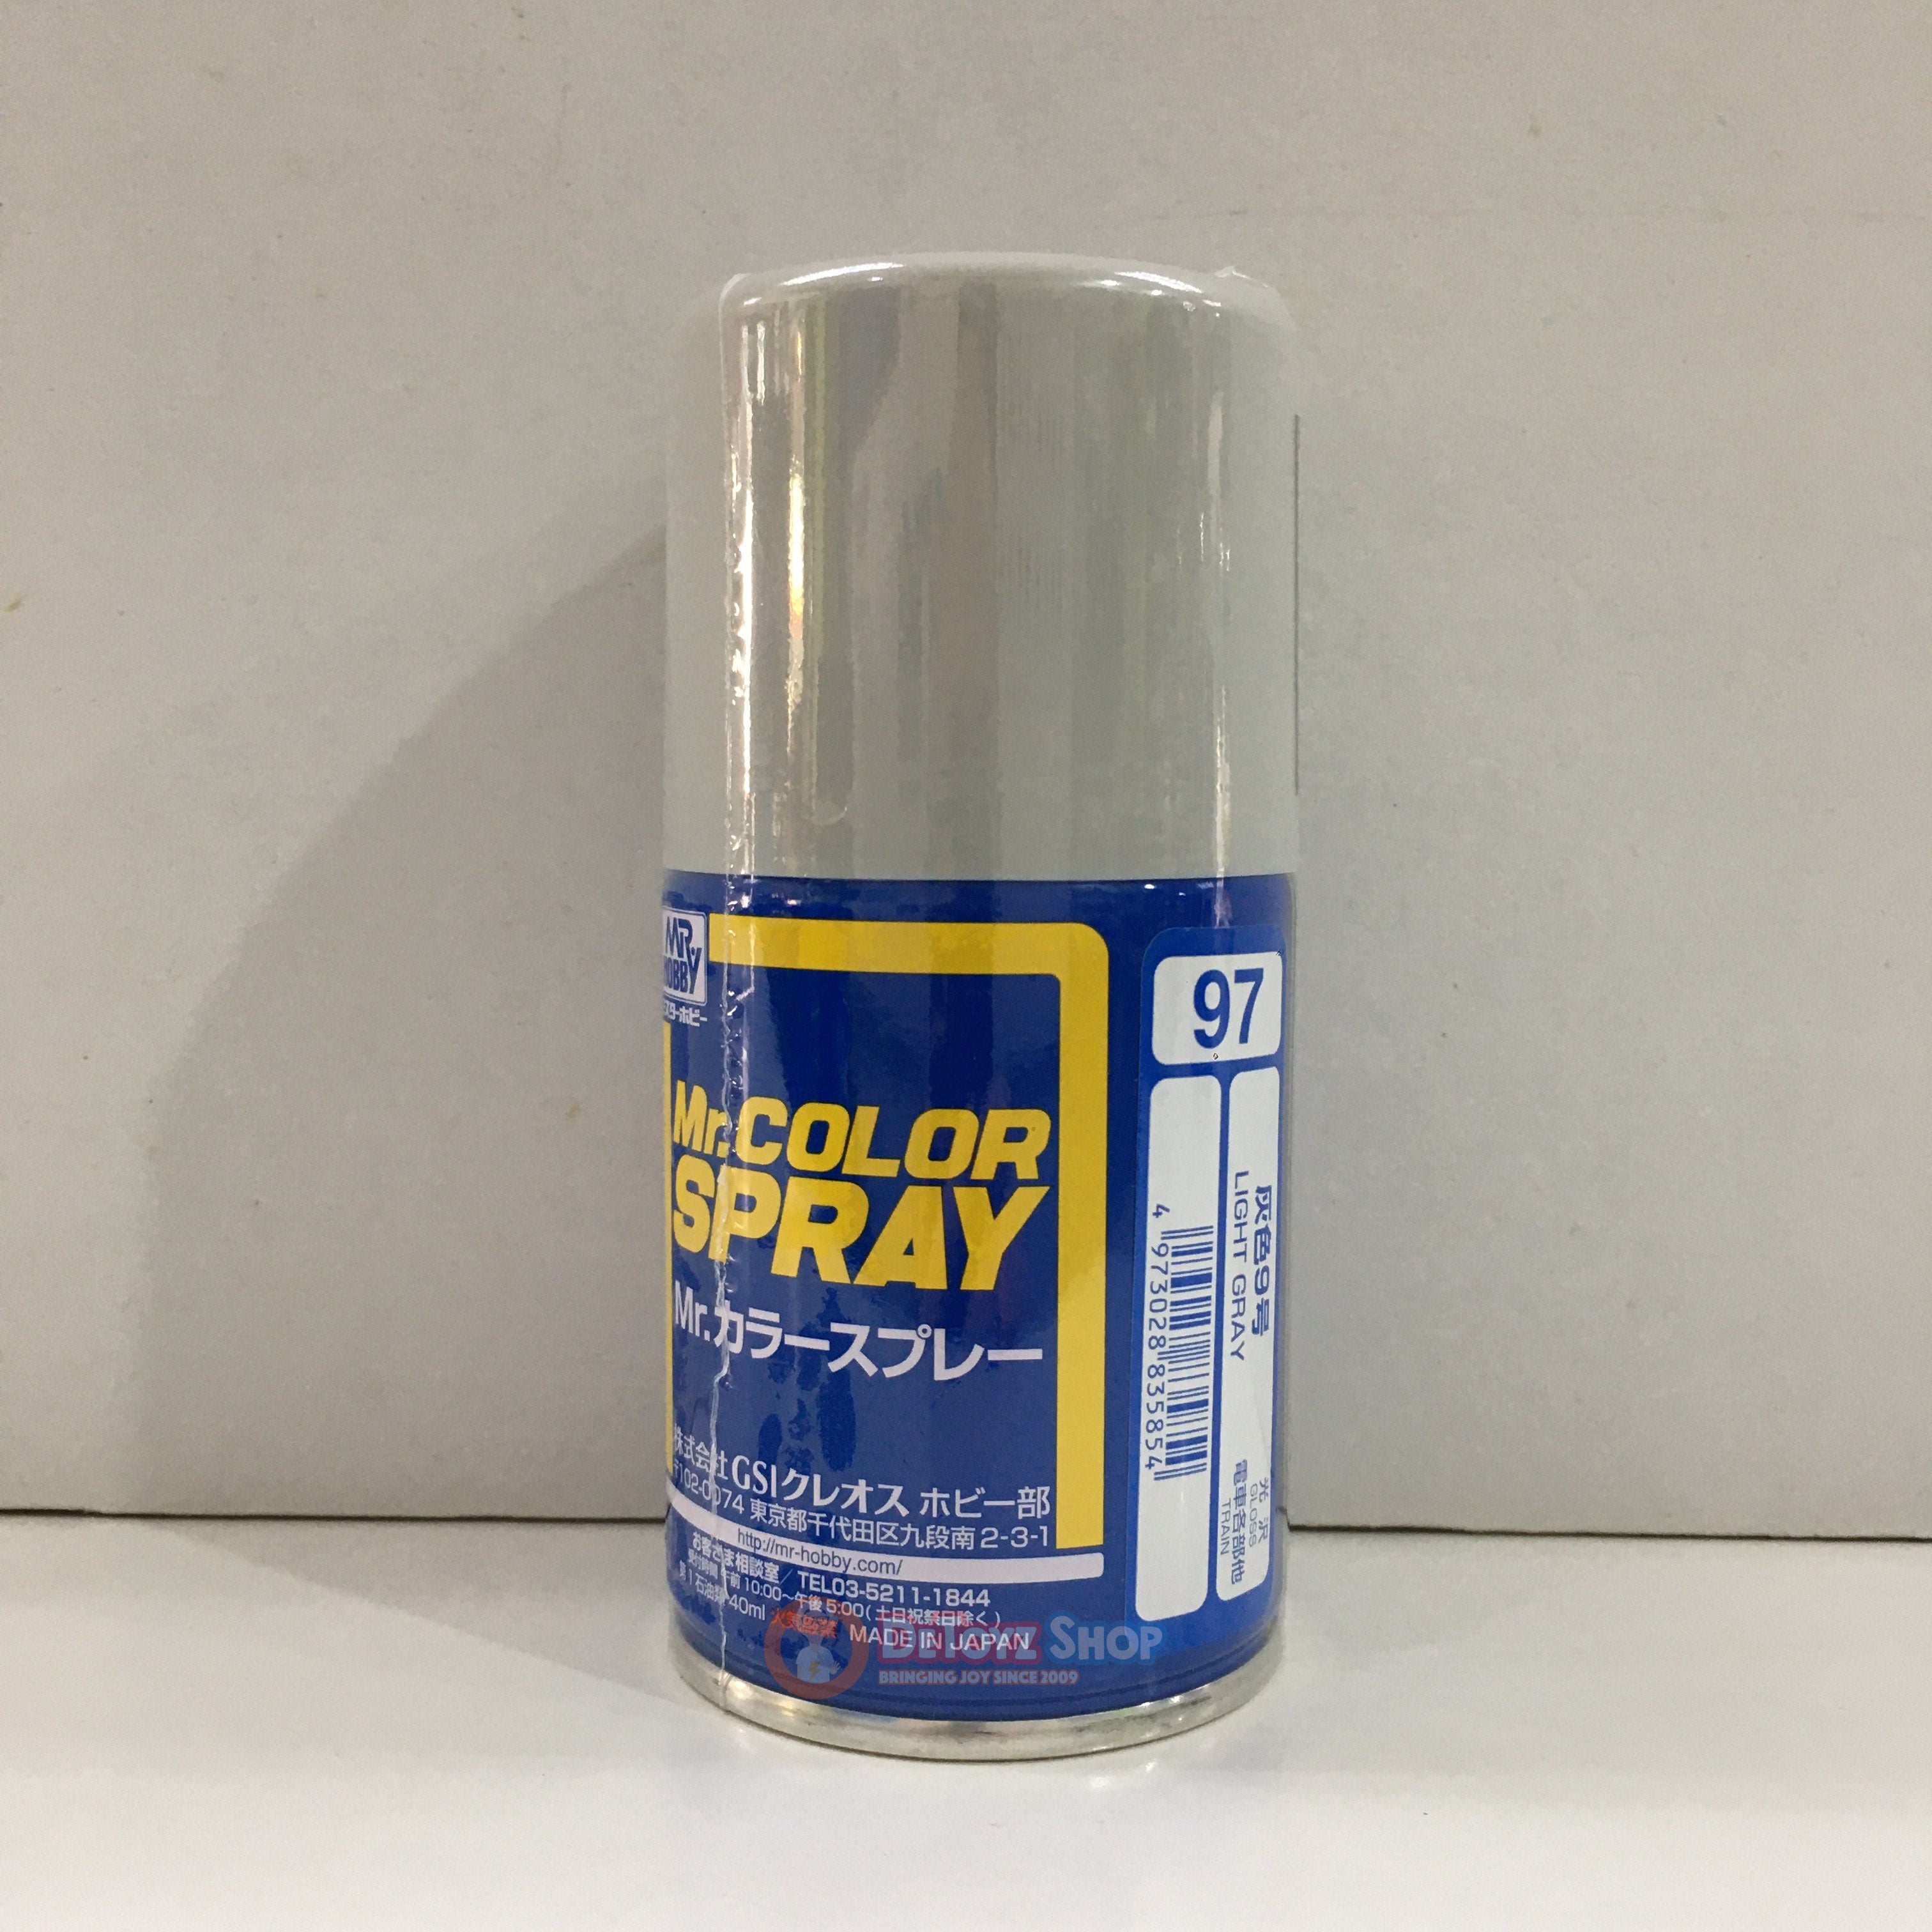 Mr Color Spray S-97 Light Gray